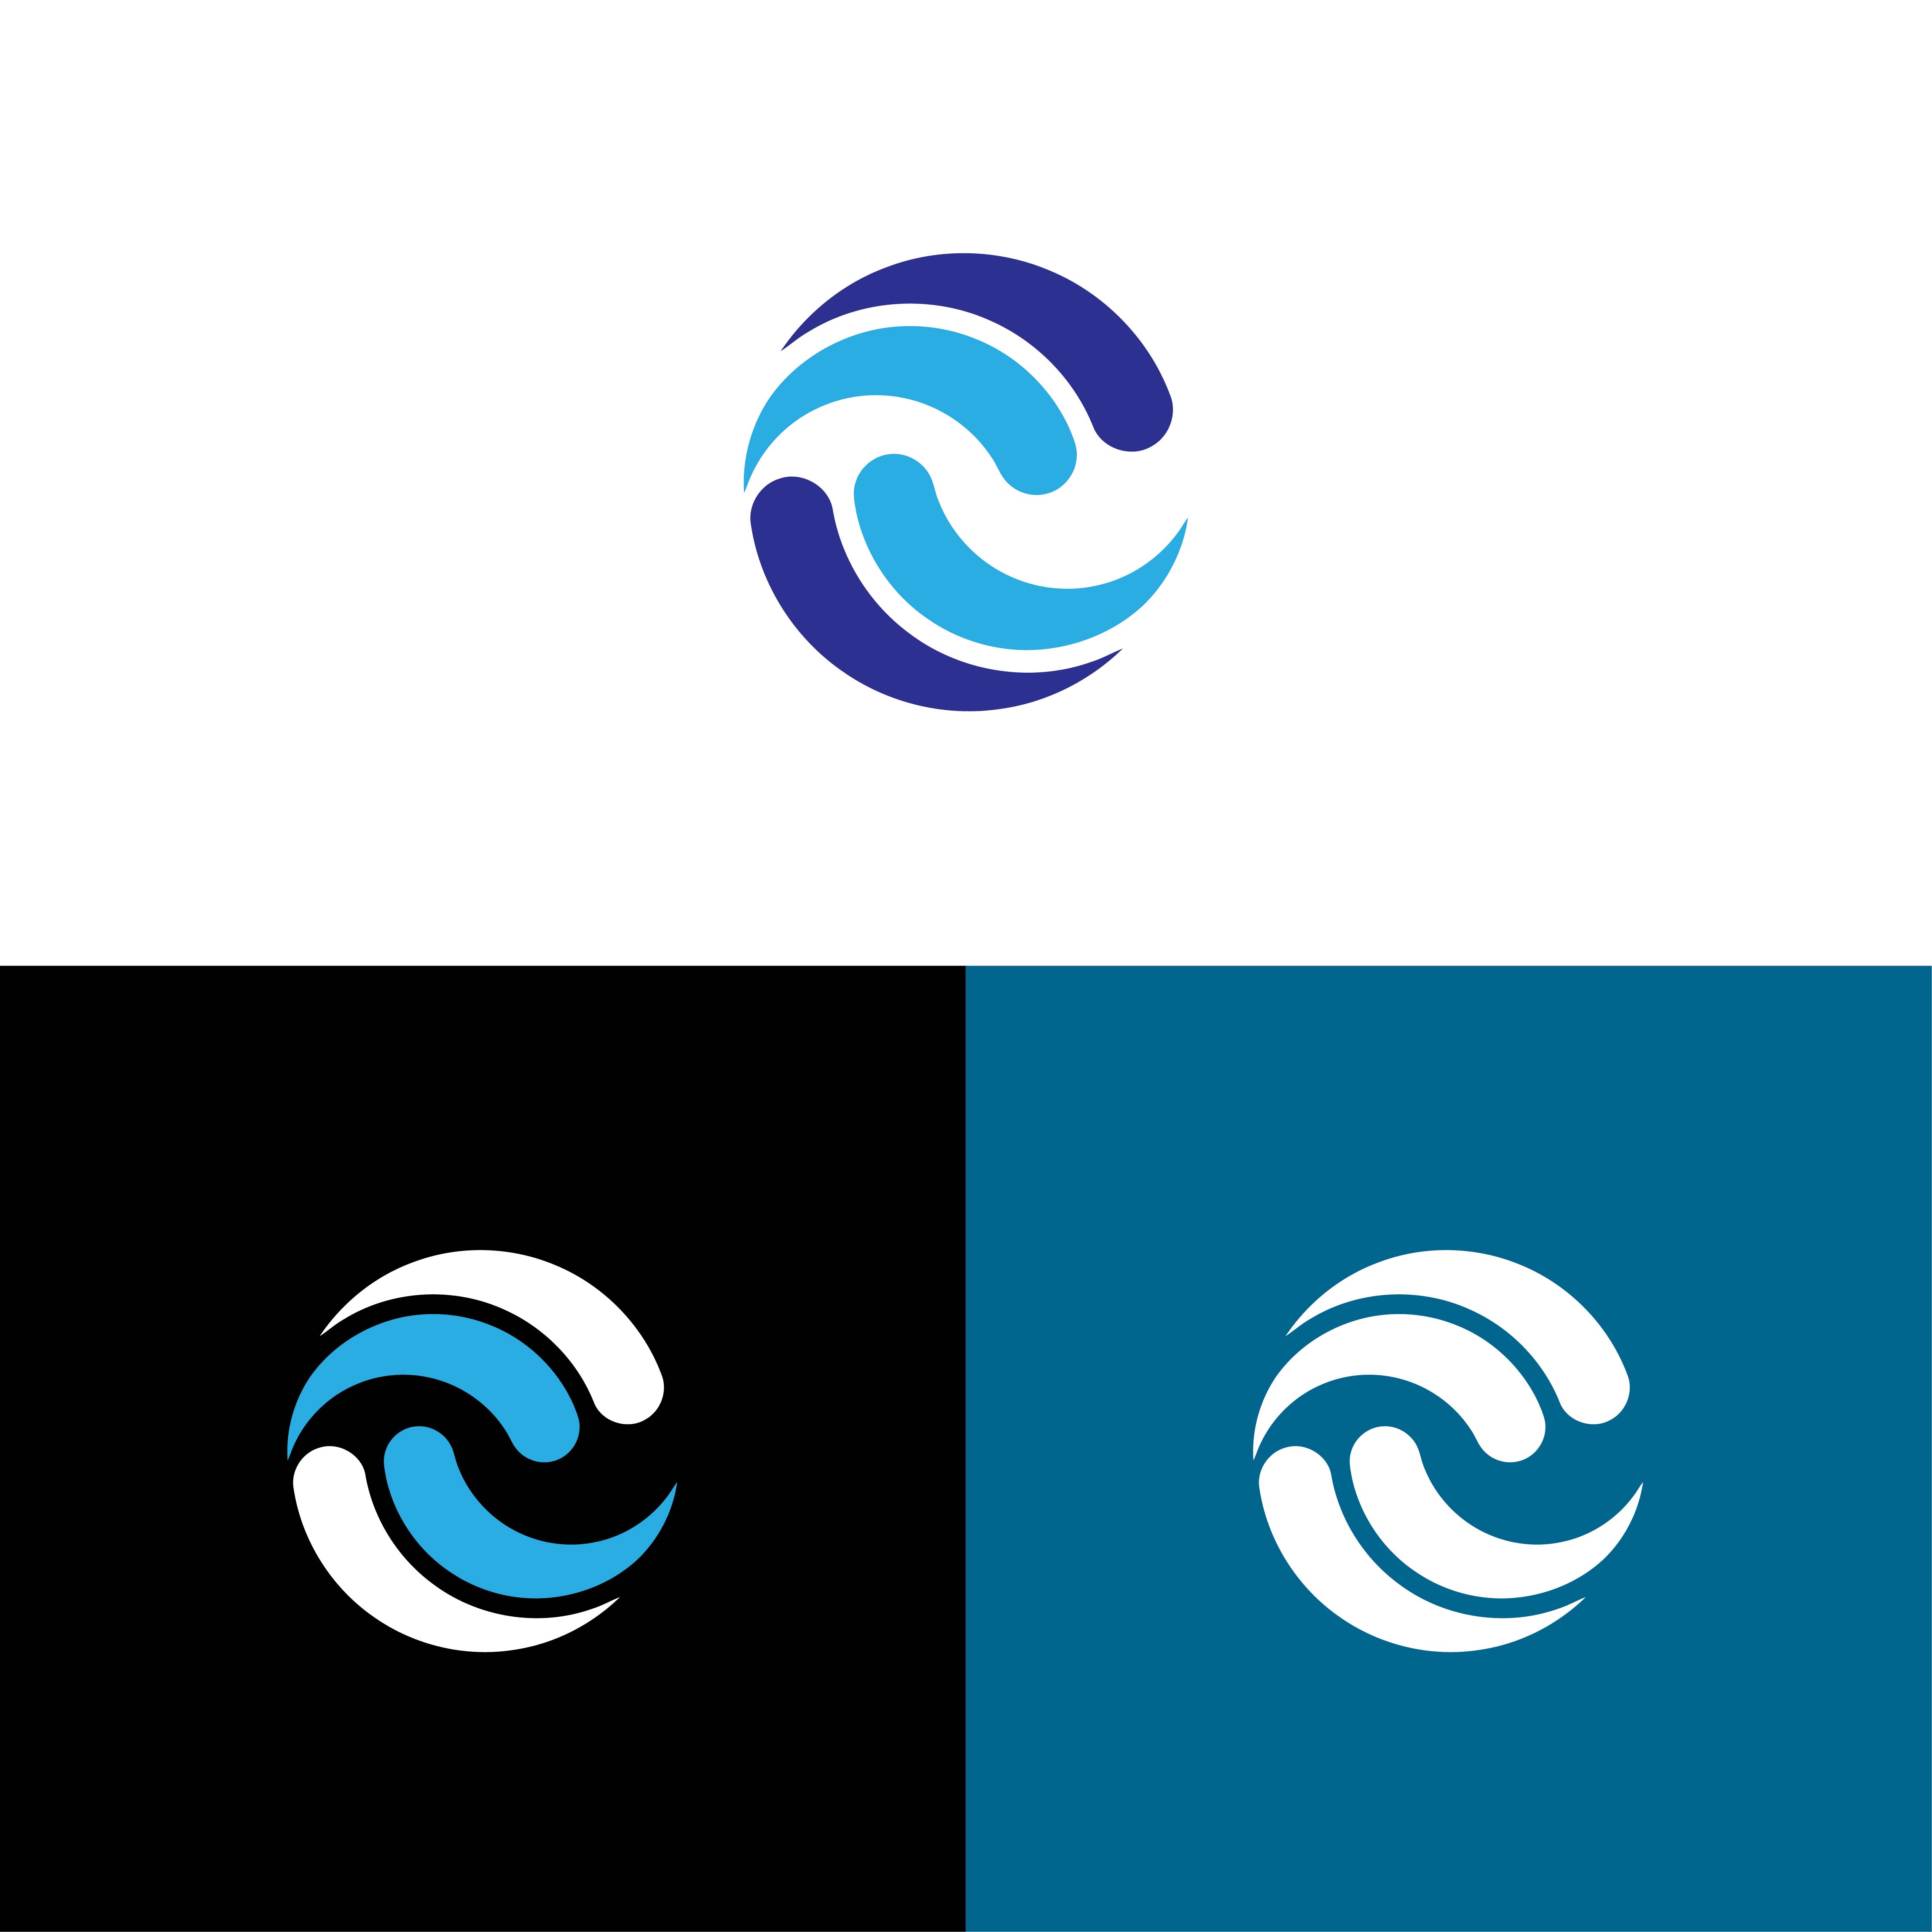 C Letter Logo Design image preview.